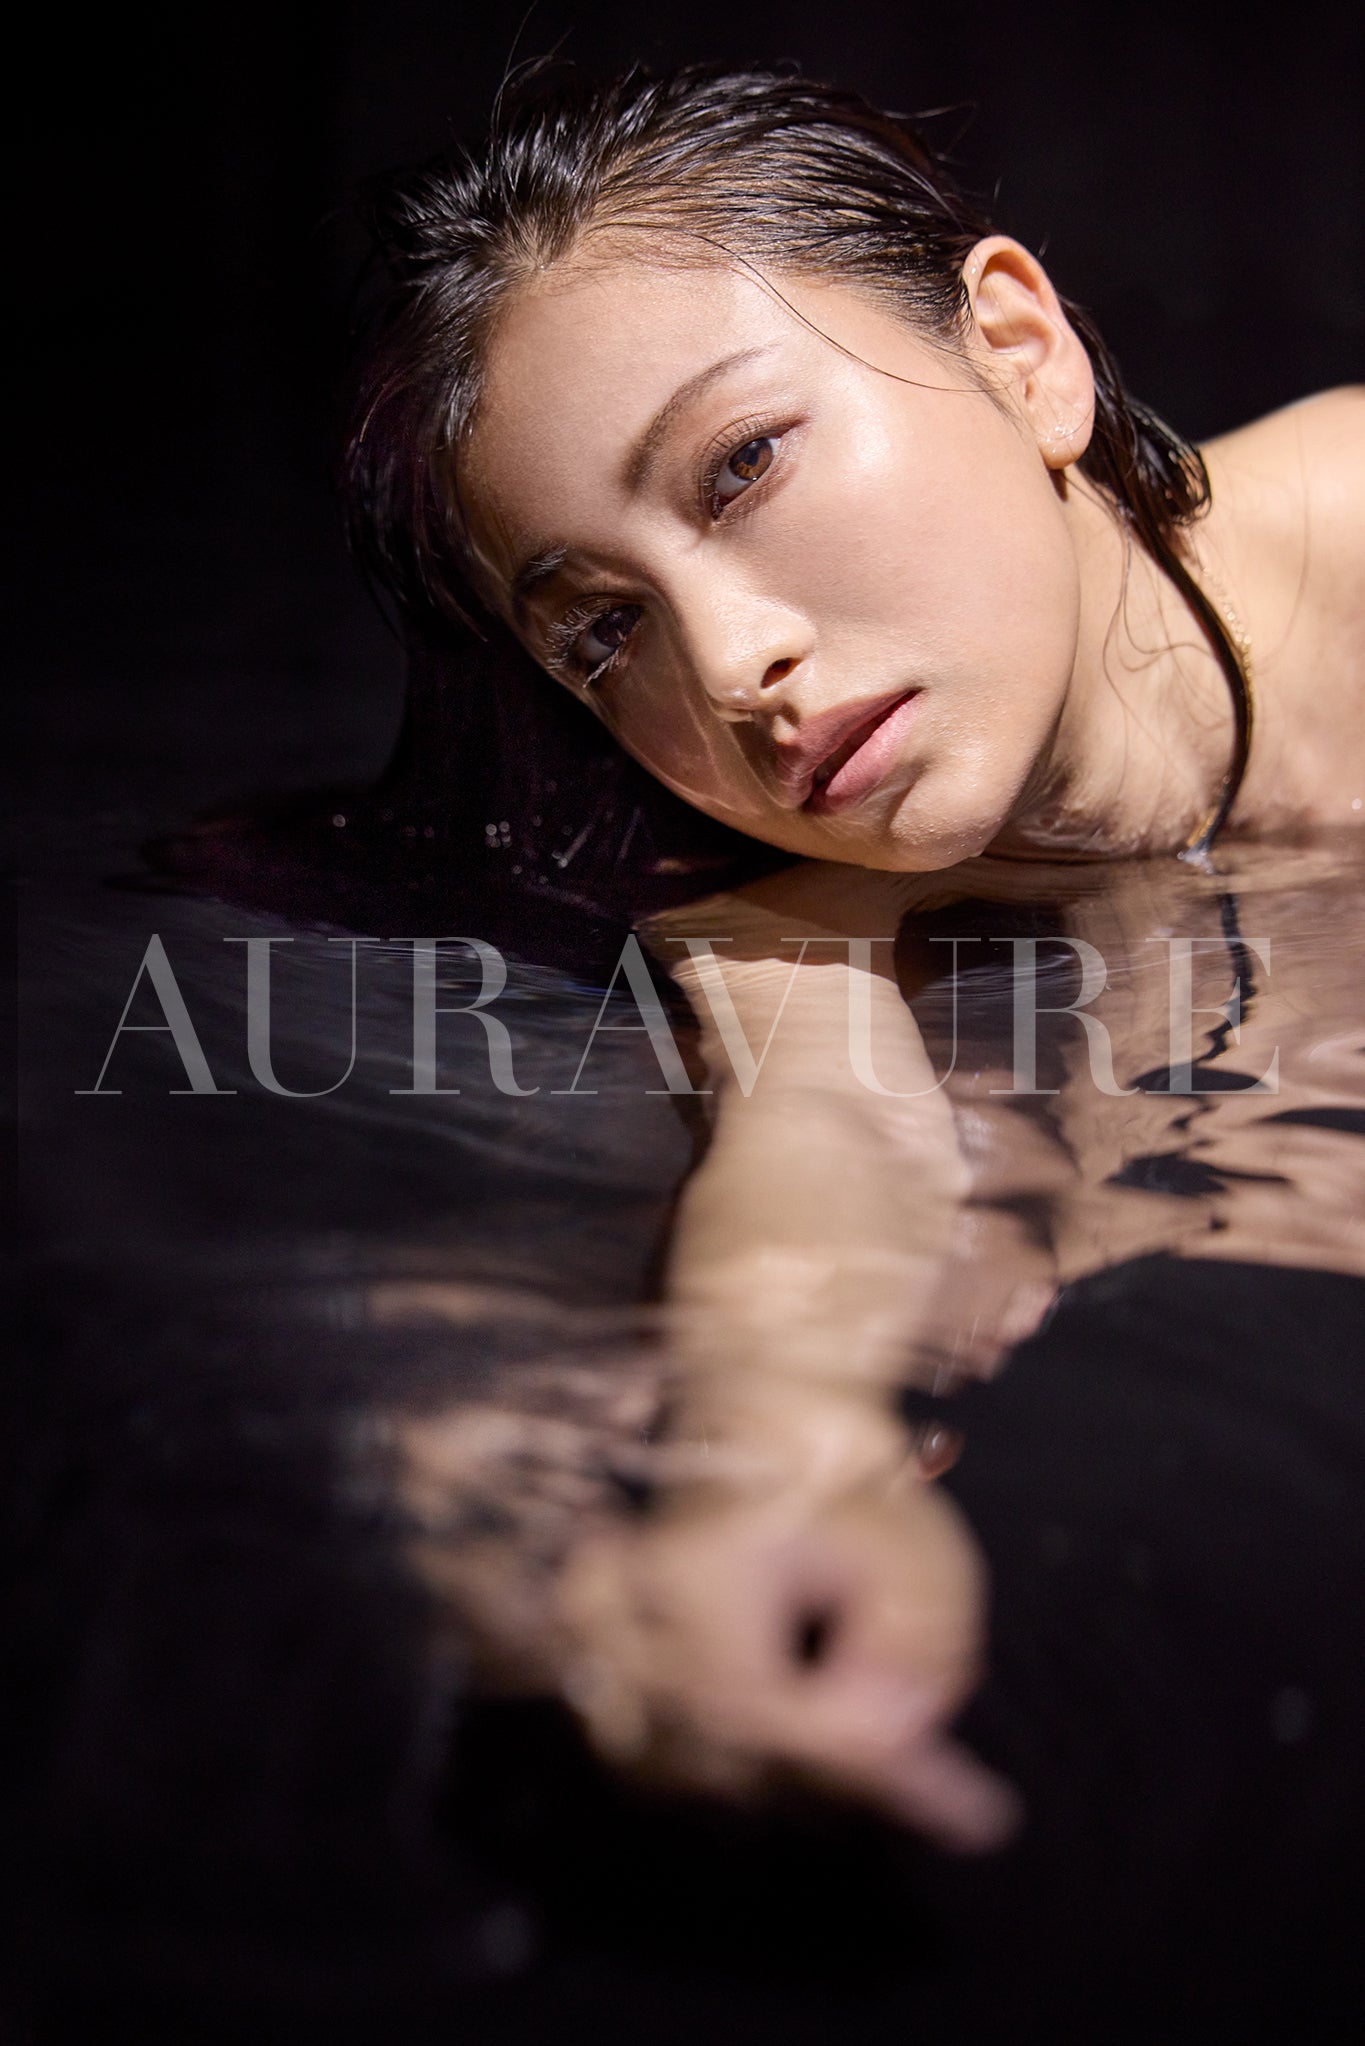 Auravure vol.02. Suzuki Takara Fotolibro Digital solo